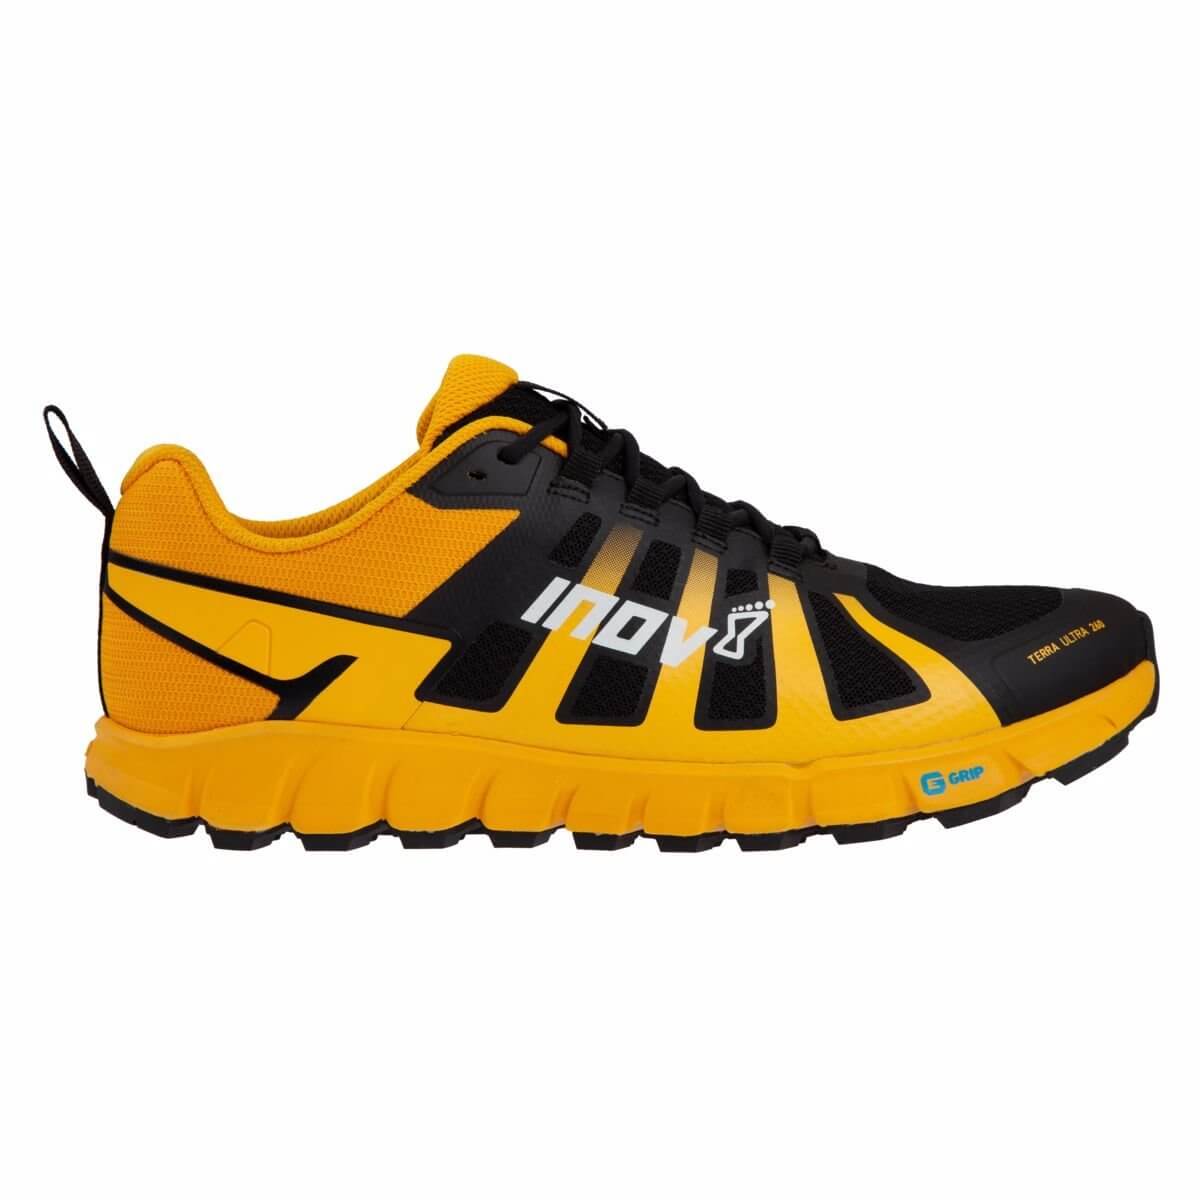 Bežecké topánky Inov-8 TERRA ULTRA 260 (S) yellow/black žlutá s černou